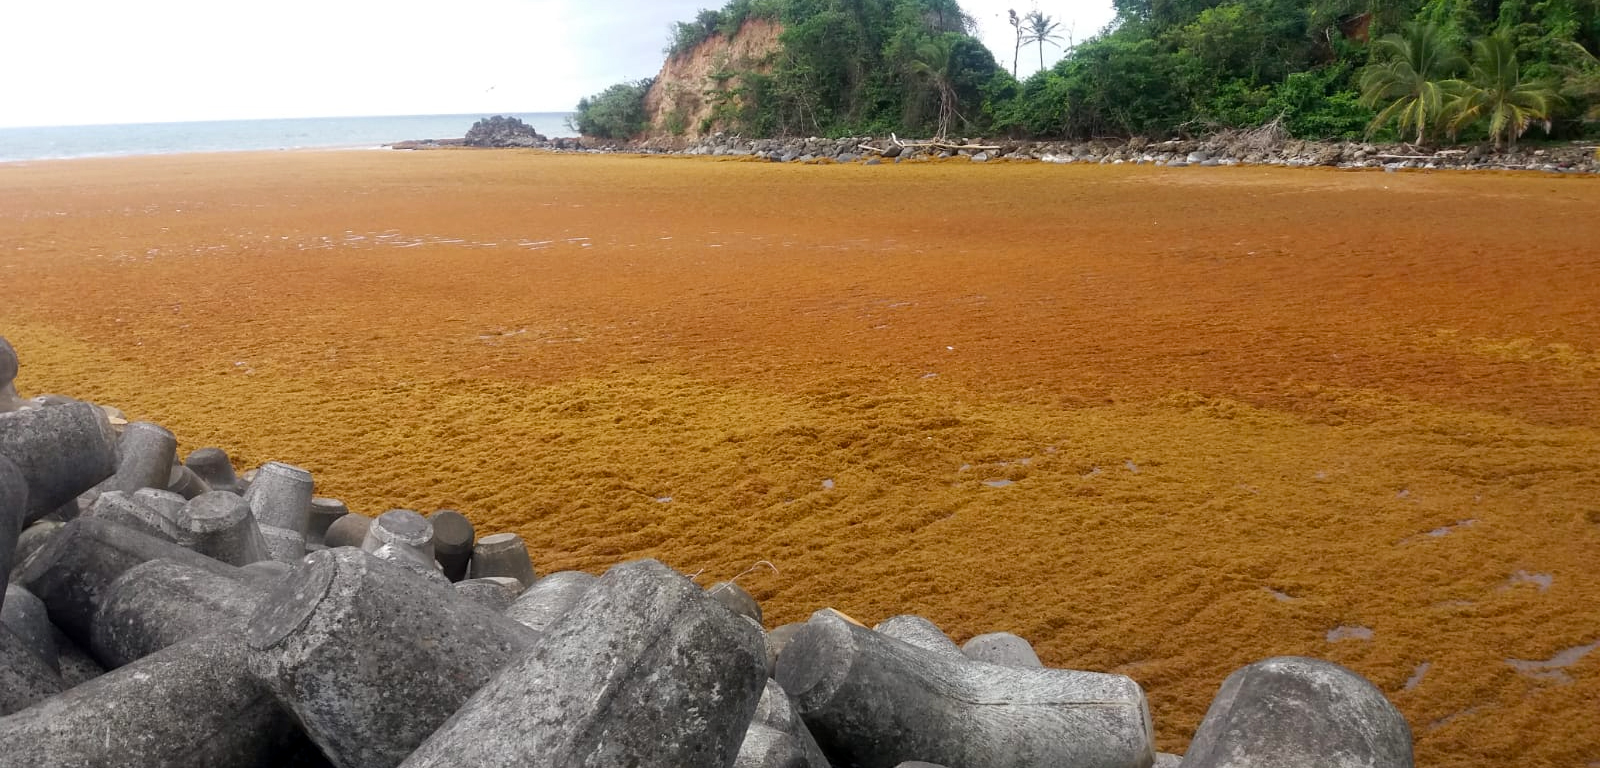 Thick seaweed chokes the waterways in Marigot, Dominica. Photo by Karen Thomas